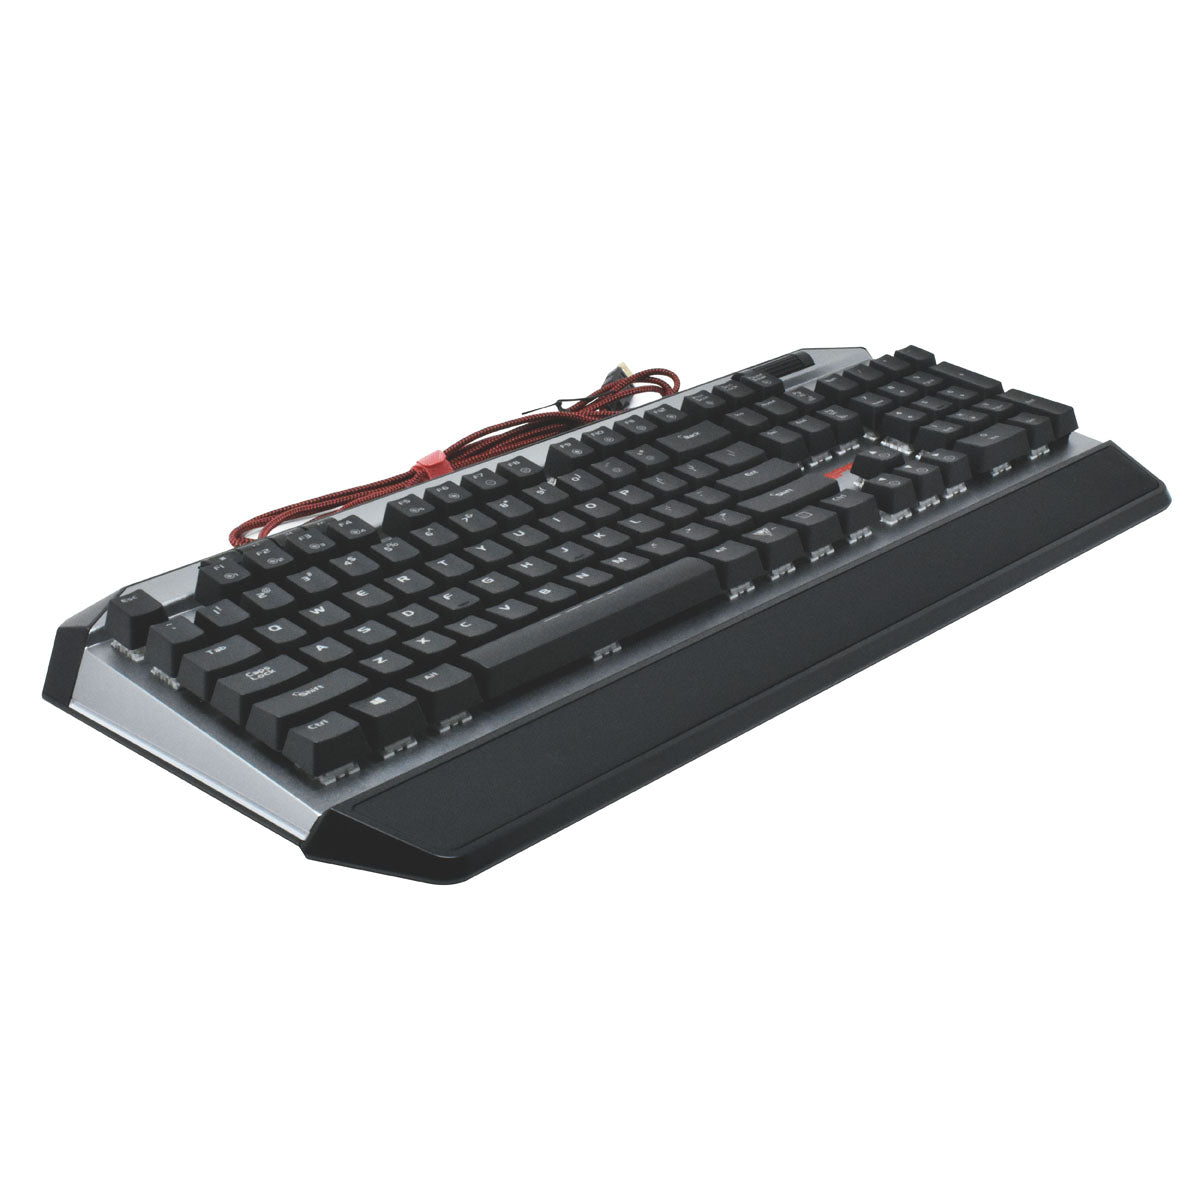 Patriot Viper V765 Gaming Keyboard